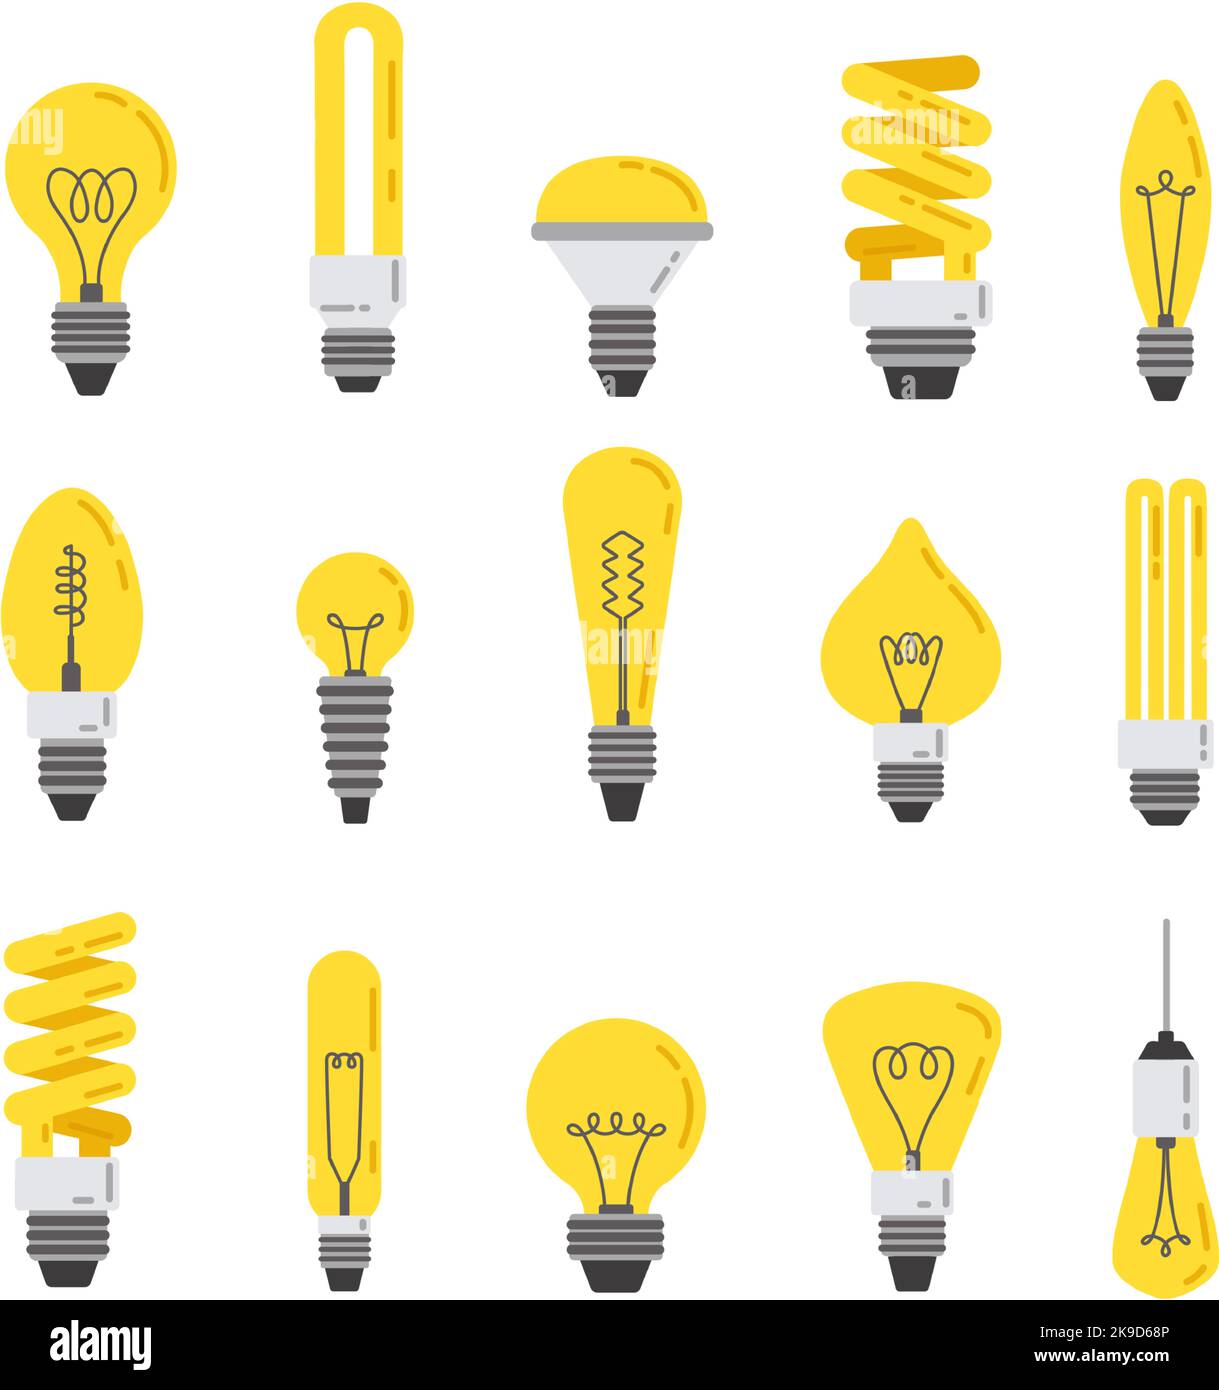 Flat light bulb. Incandescent lamp, energy efficient led lights and bright idea symbol cartoon vector set Stock Vector